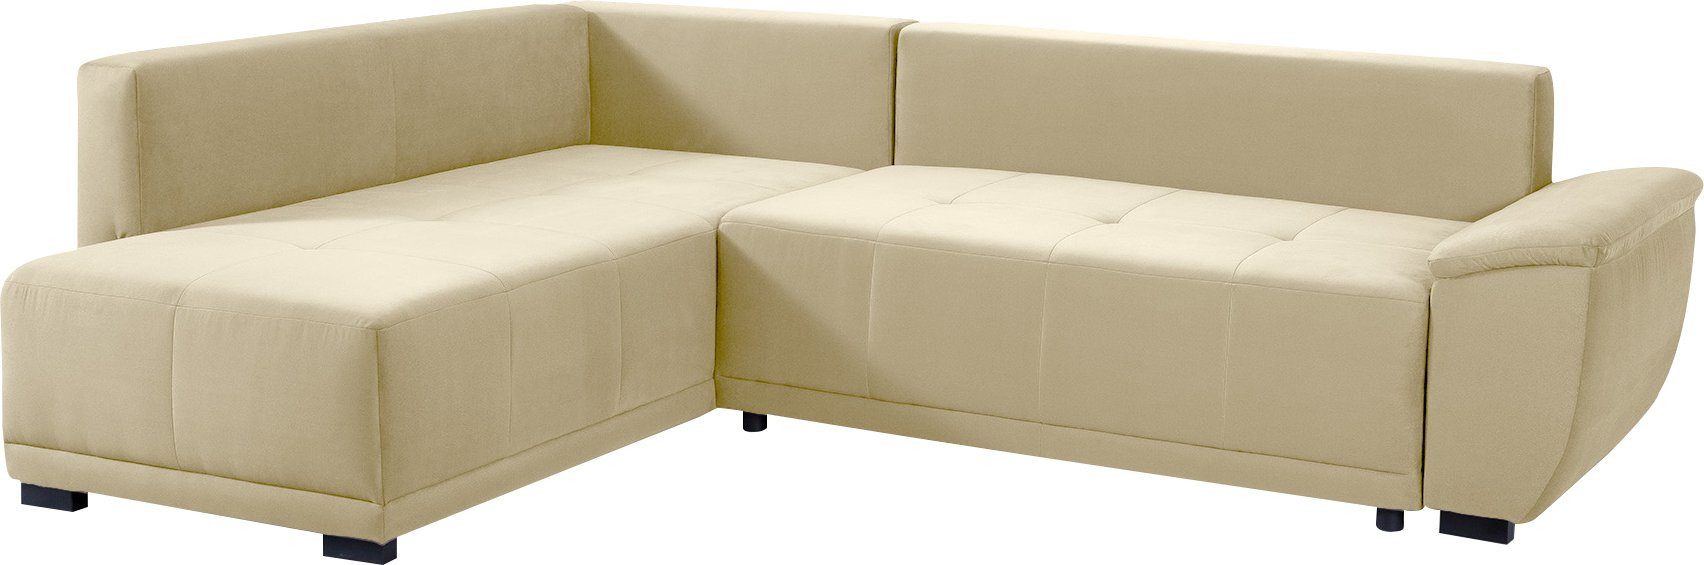 exxpo - sofa & beidseitig, 5 mane Ecksofa, Rückenkissen inkl. Bettkasten, fashion Schlaffunktion